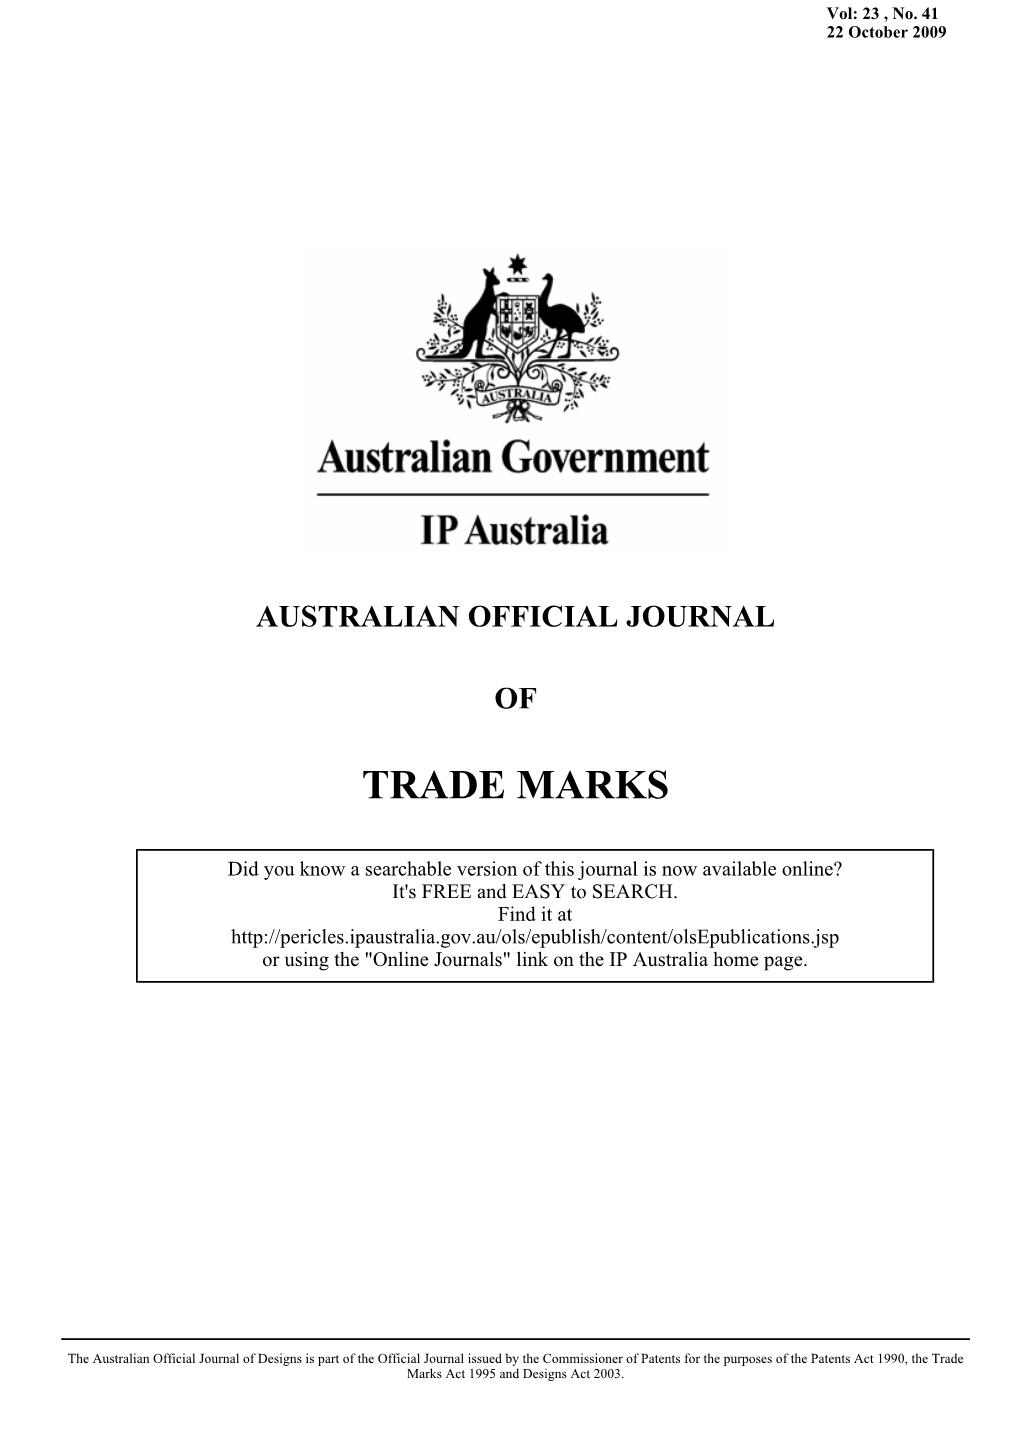 AUSTRALIAN OFFICIAL JOURNAL of TRADE MARKS 22 October 2009